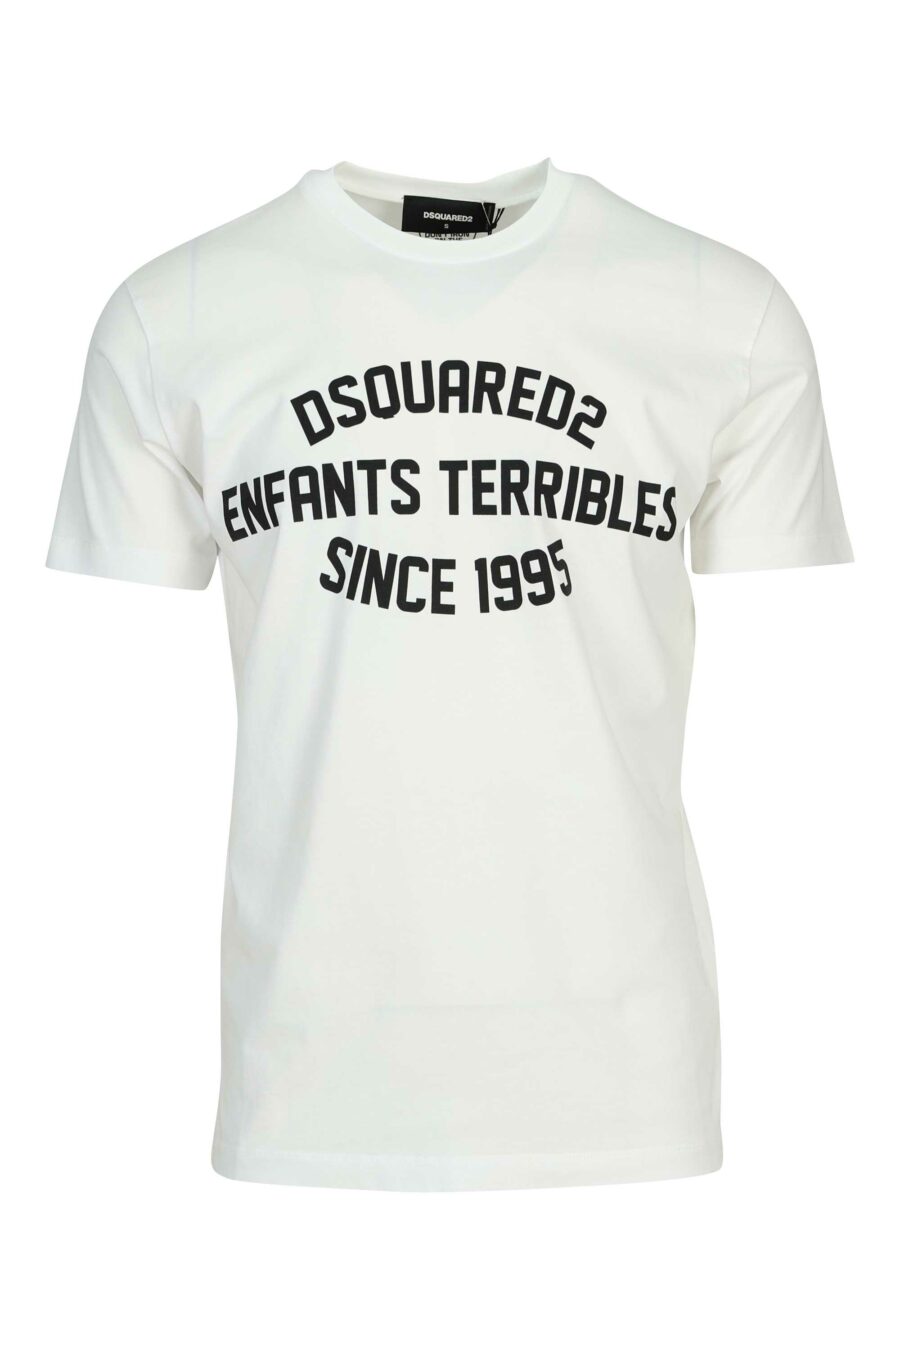 Camiseta blanca con maxilogo "enfants terribles since 1995" - 8054148504007